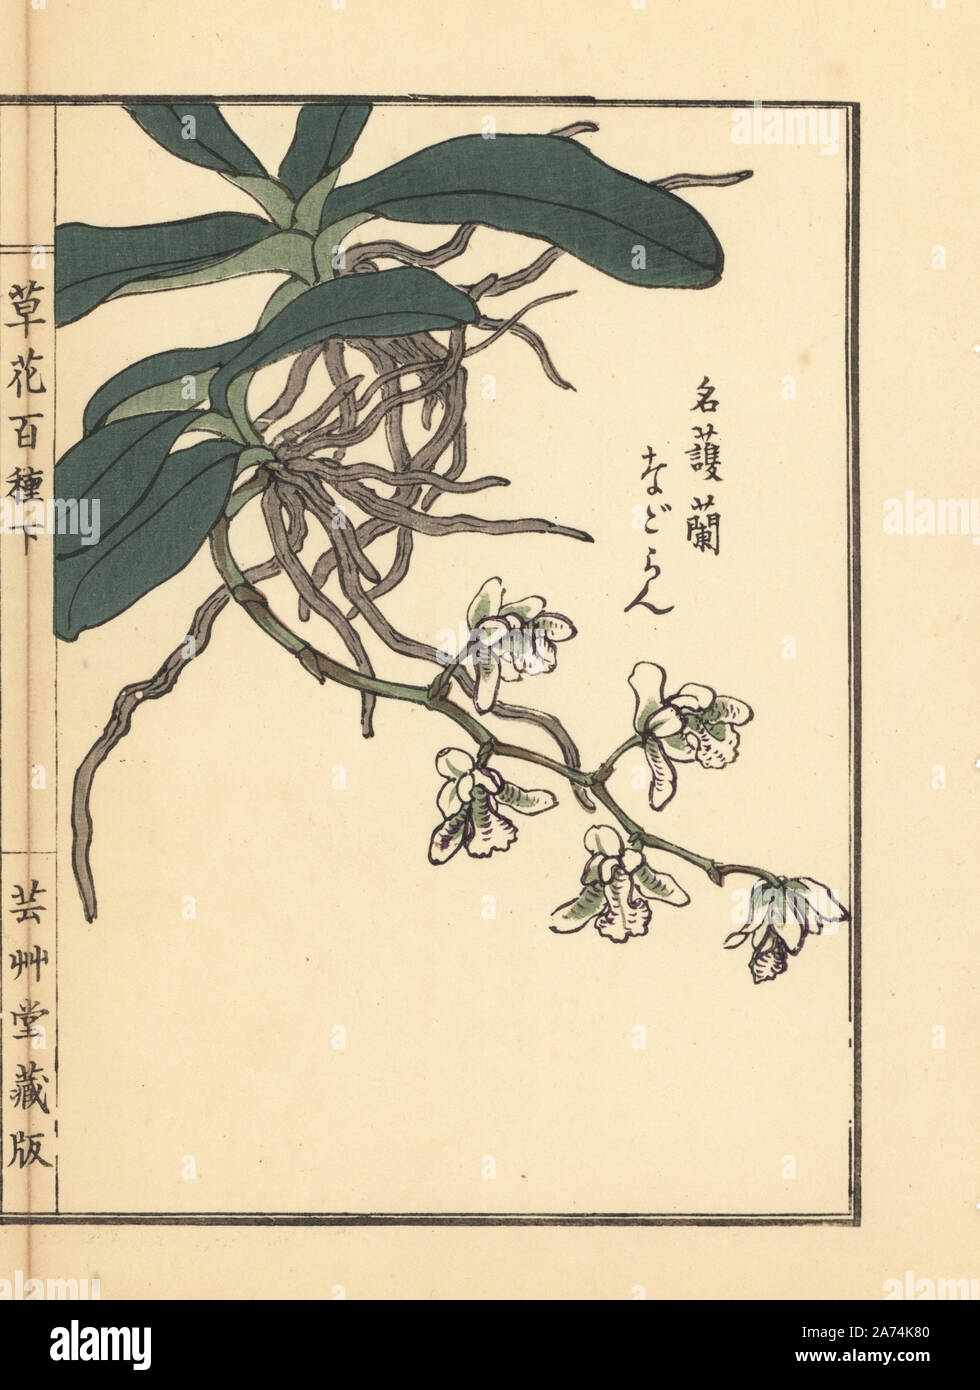 Nagoran or Japan sedirea orchid, Aerides japonicum Reichb. Handcoloured woodblock print by Kono Bairei from Kusa Bana Hyakushu (One Hundred Varieties of Flowers), Tokyo, Yamada, 1901. Stock Photo